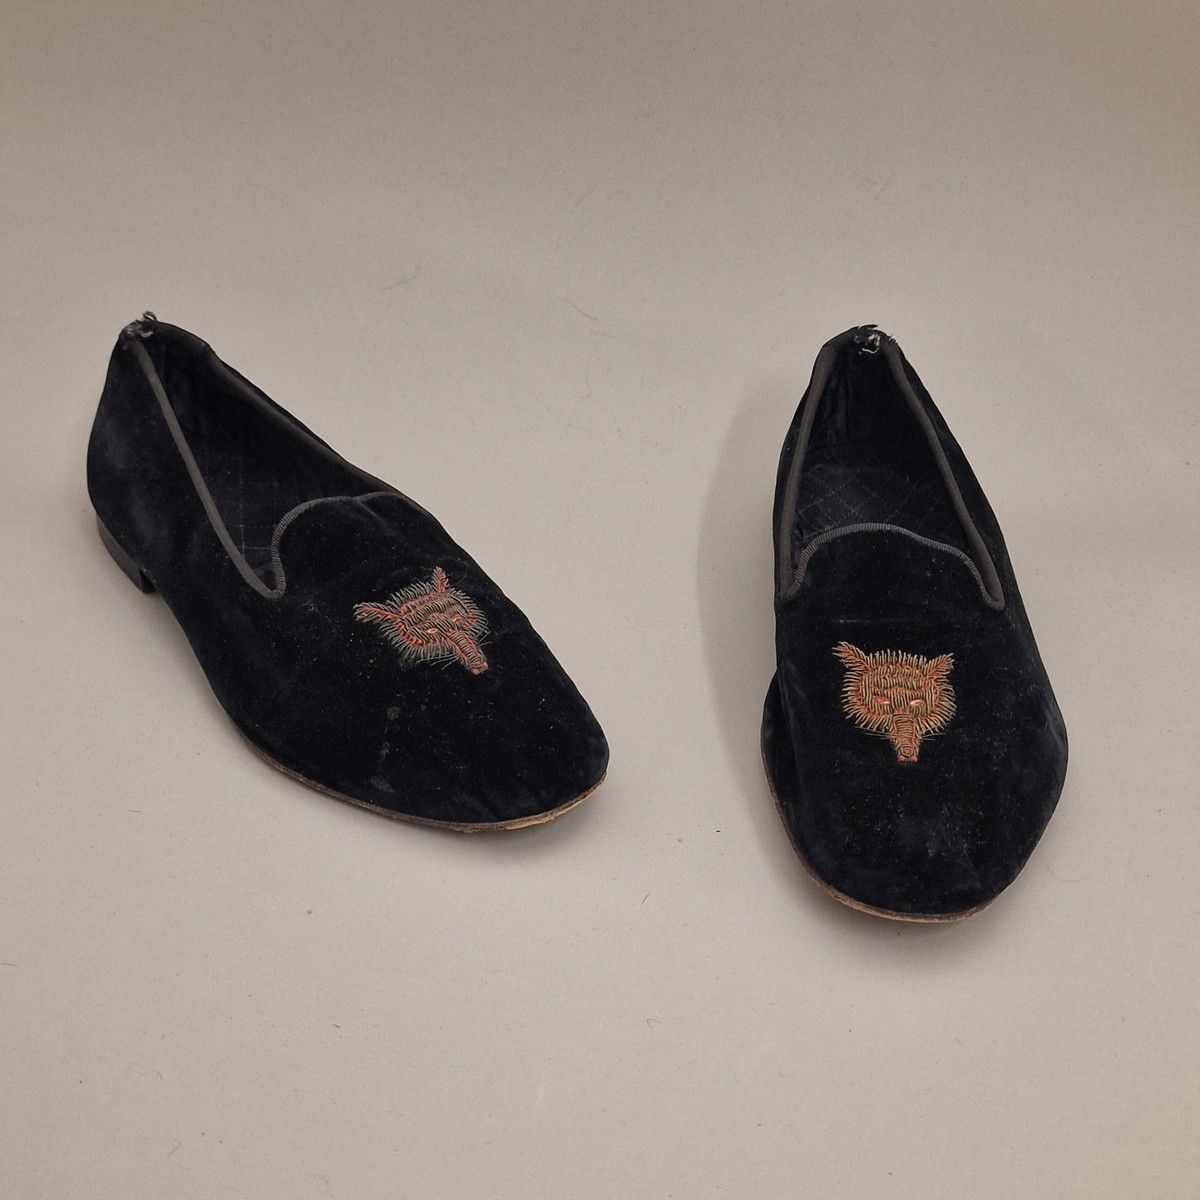 Null TOD'S - 2 双司机鞋，一双为巧克力色粒面皮革（S.6.5），另一双为深棕色光滑皮革（S.6）。 
(磨损严重） 

附： 
- PINO GI&hellip;